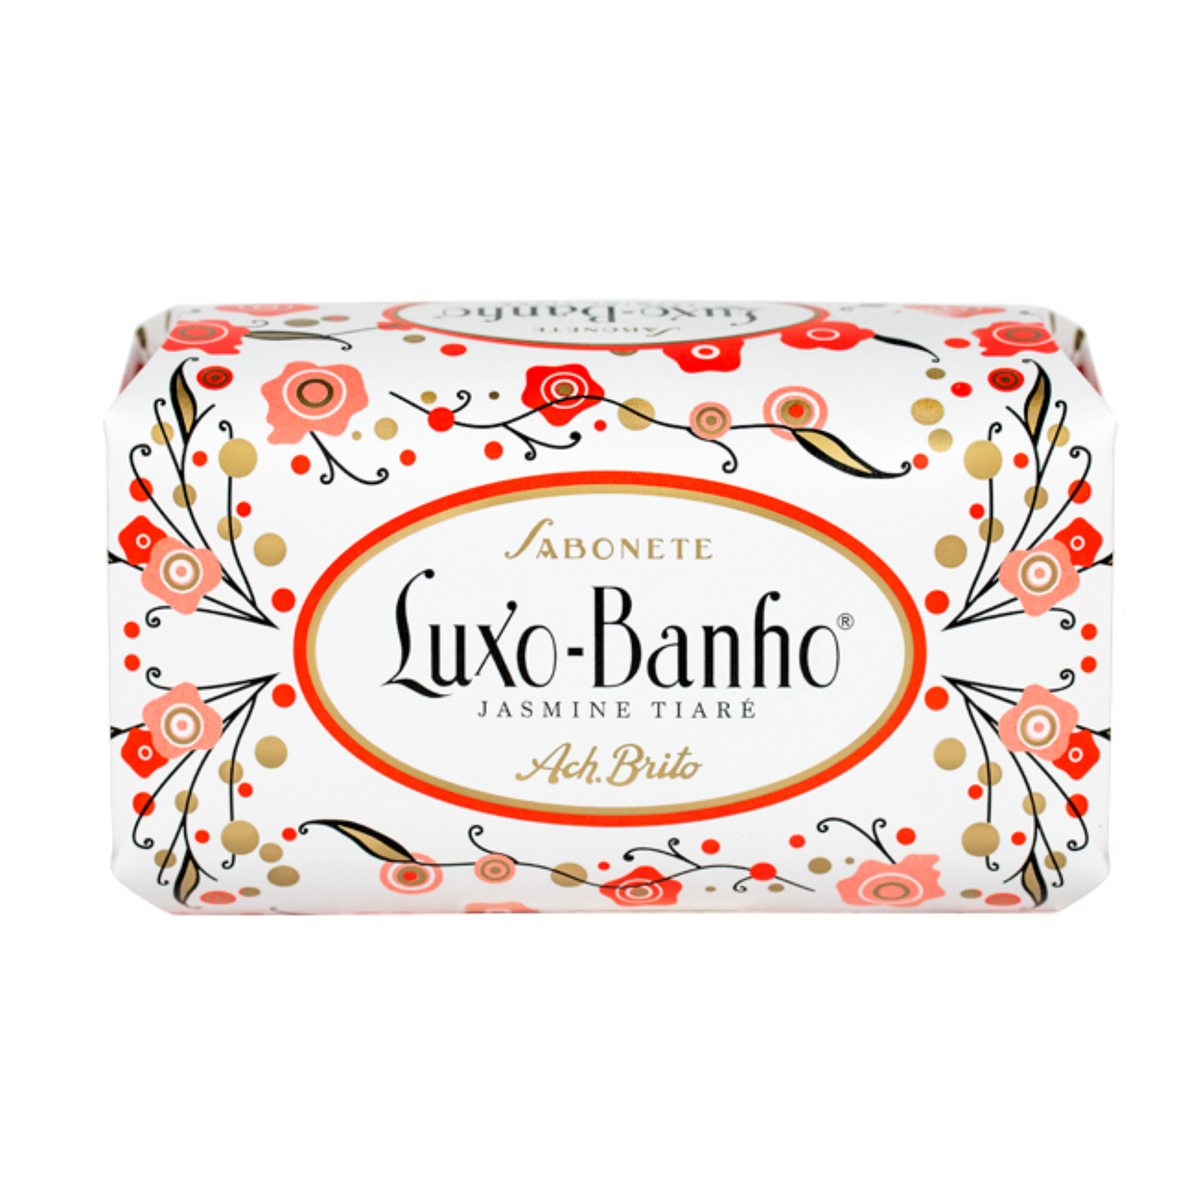 Primary image of Luxo-Banho Jasmine Tiare Bar Soap 